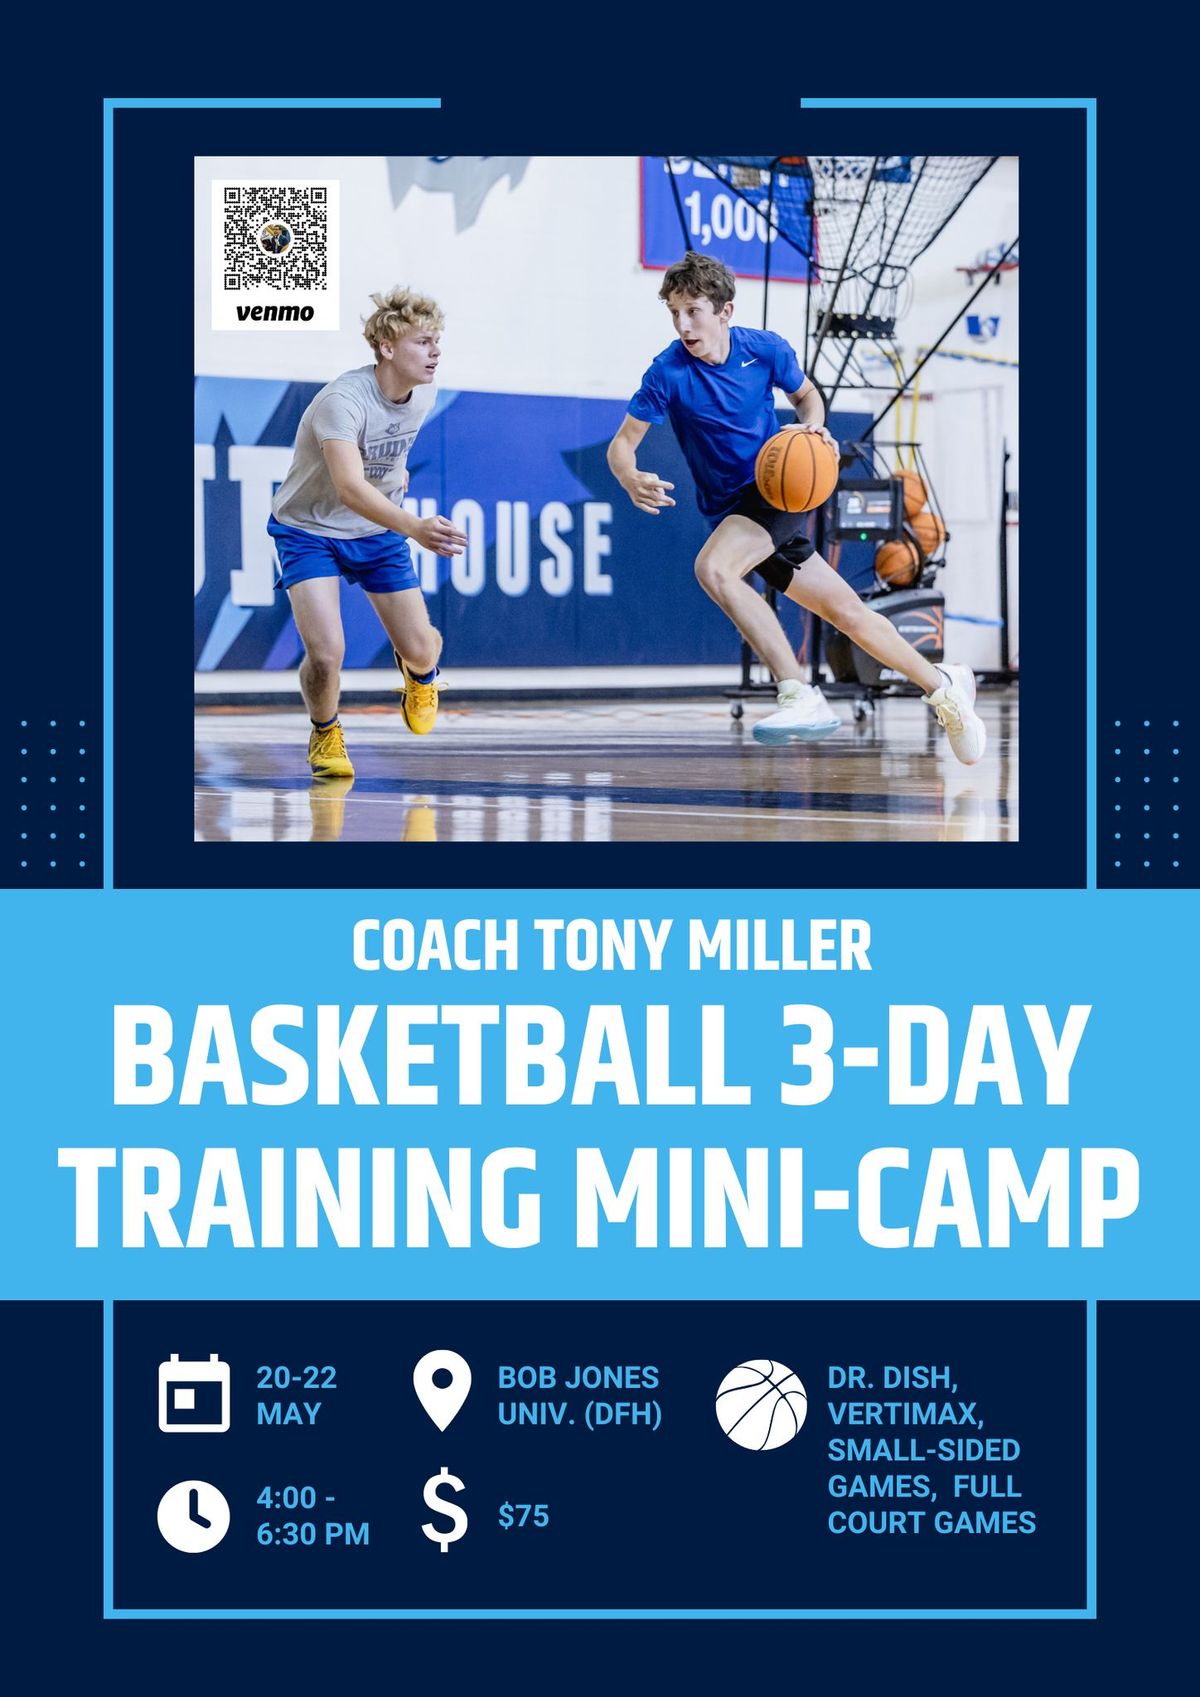 Coach Tony Miller's 3-Day Basketball Training Mini-Camp